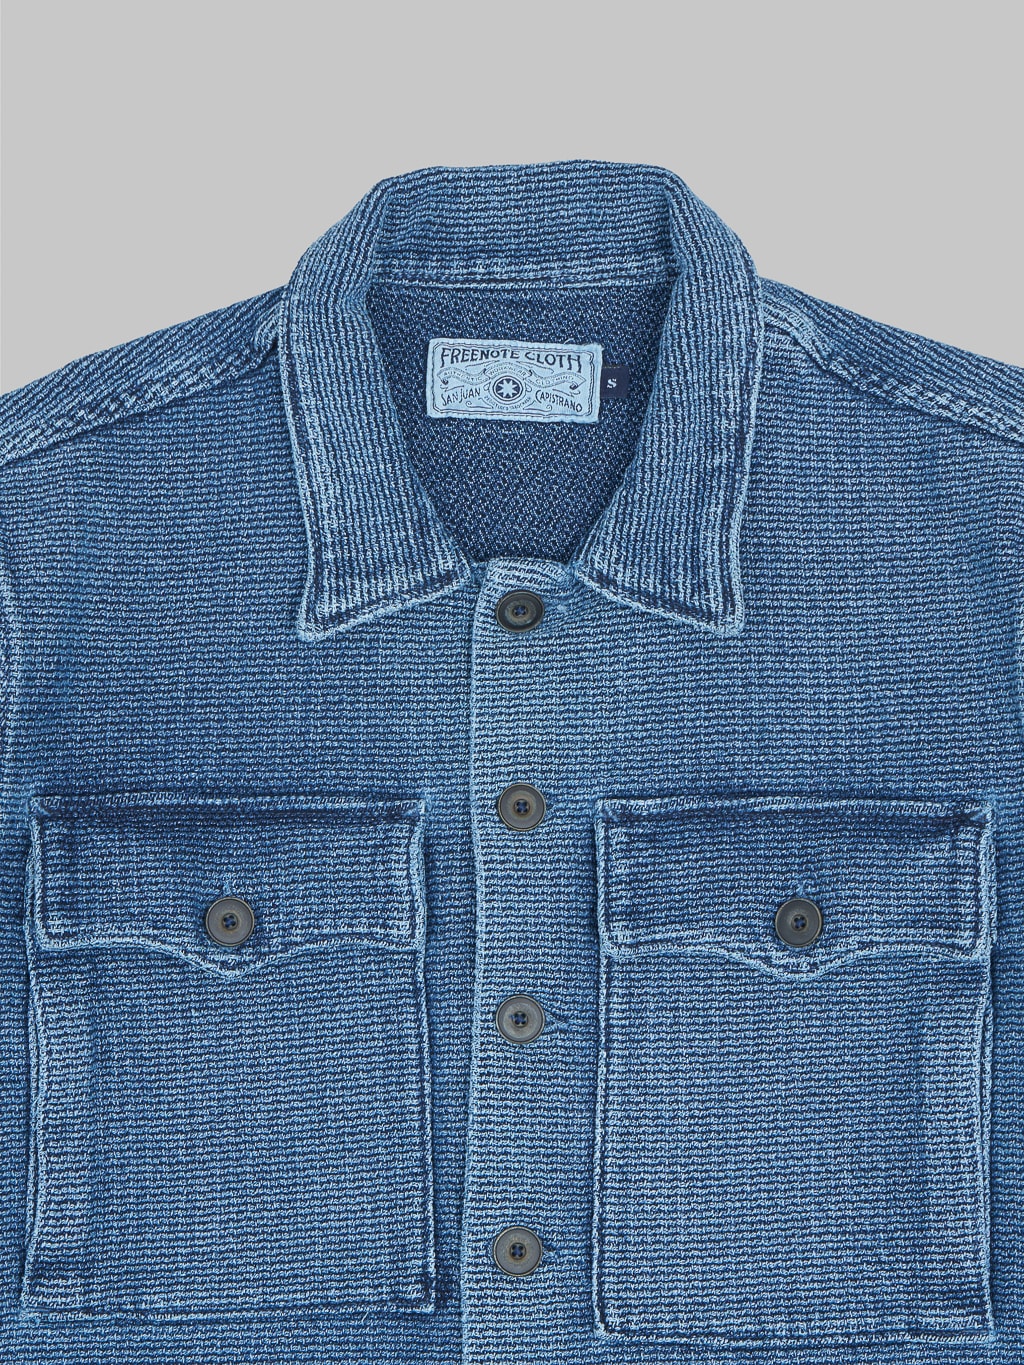 freenote cloth midway indigo sashiko jacket front details